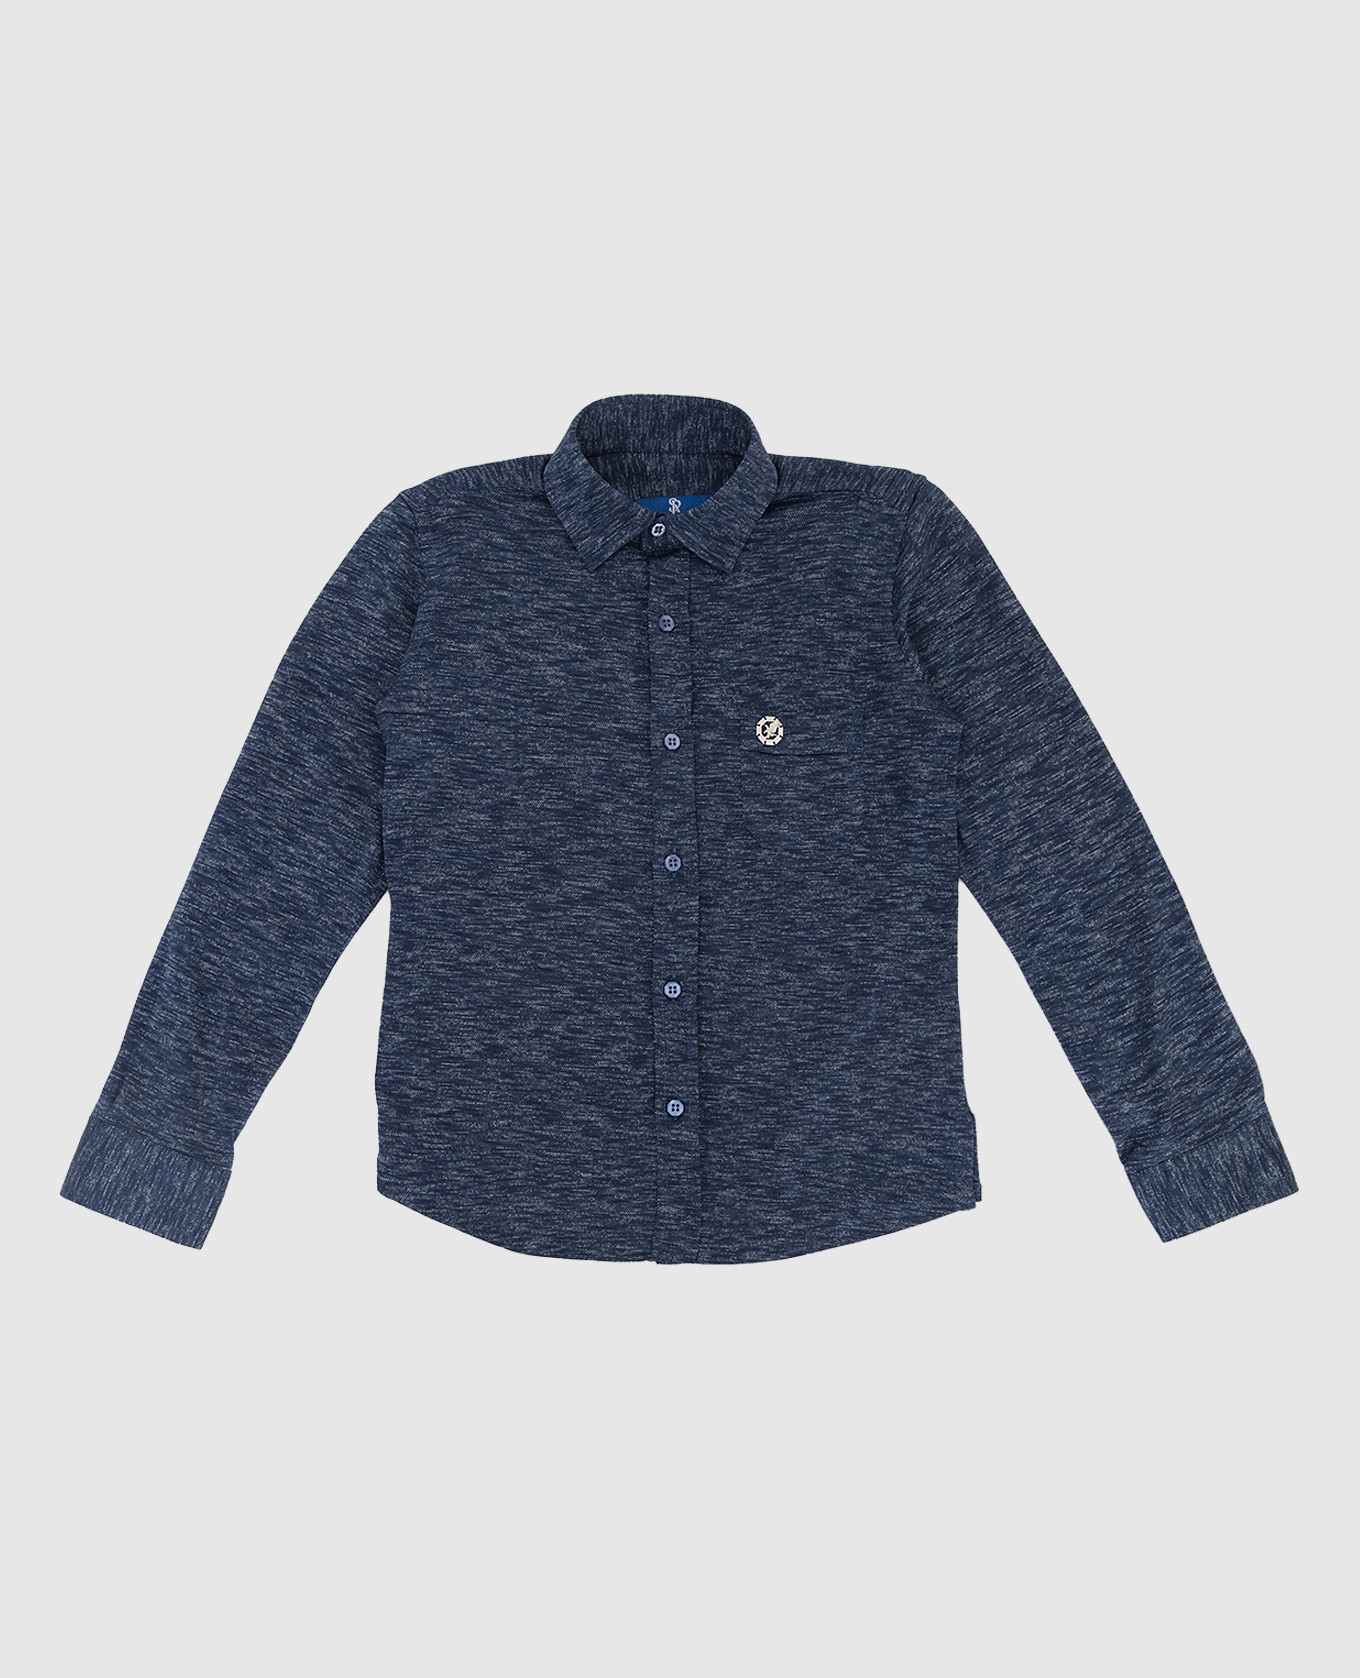 Children's blue shirt in a pattern